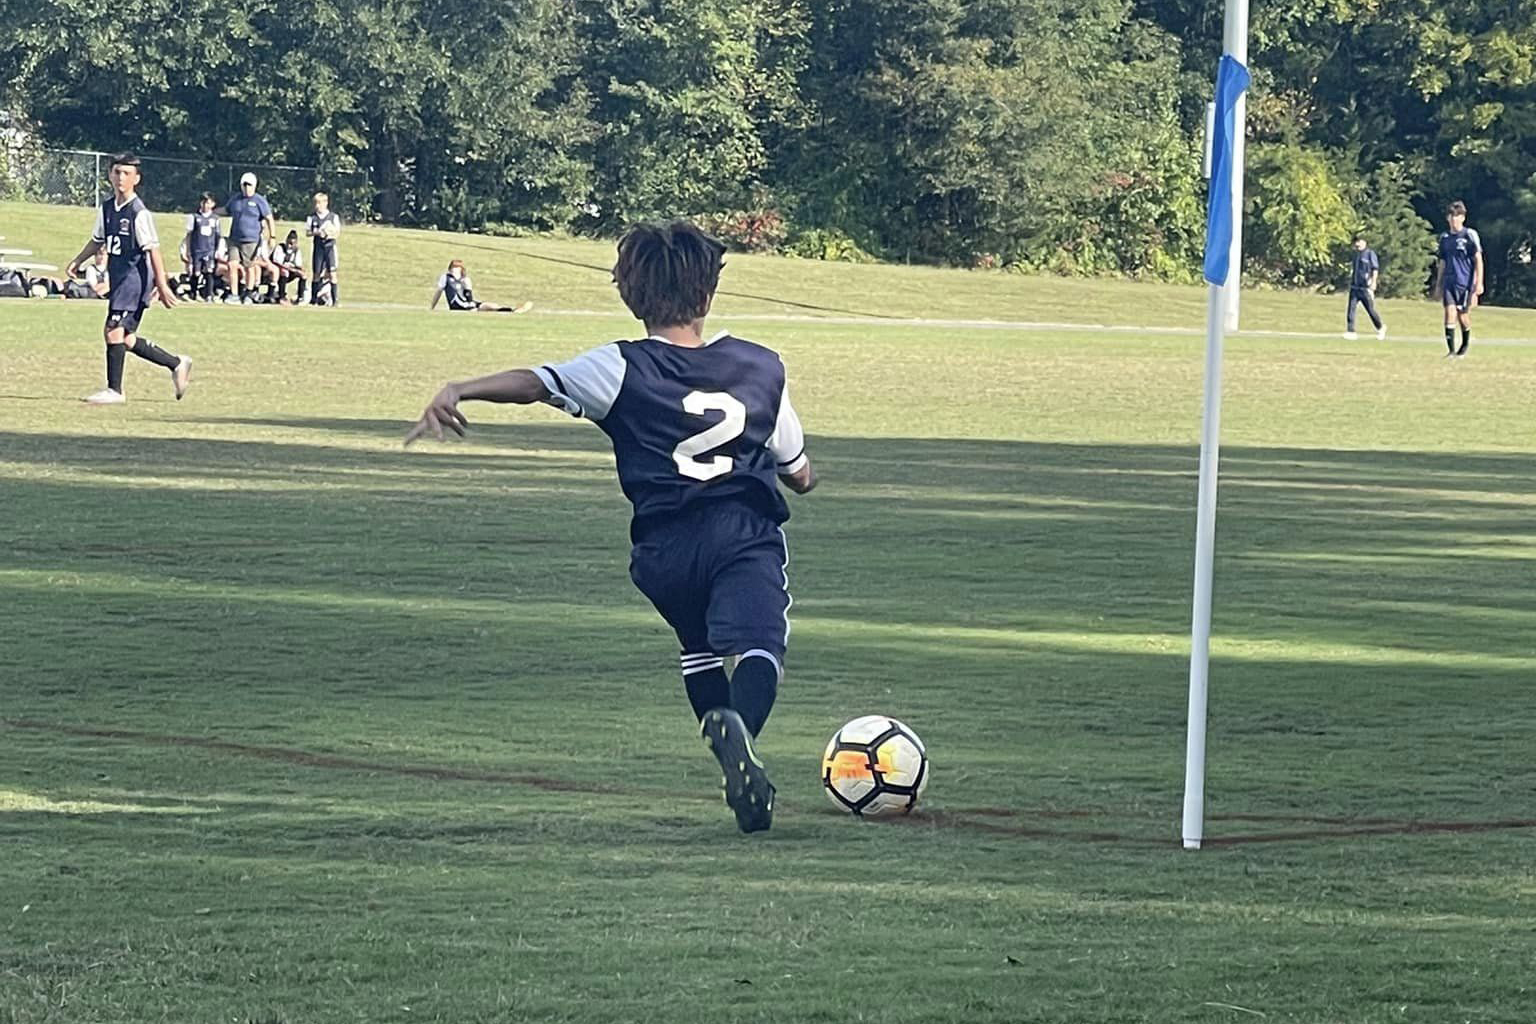 A boy kicking a soccer ball on the field